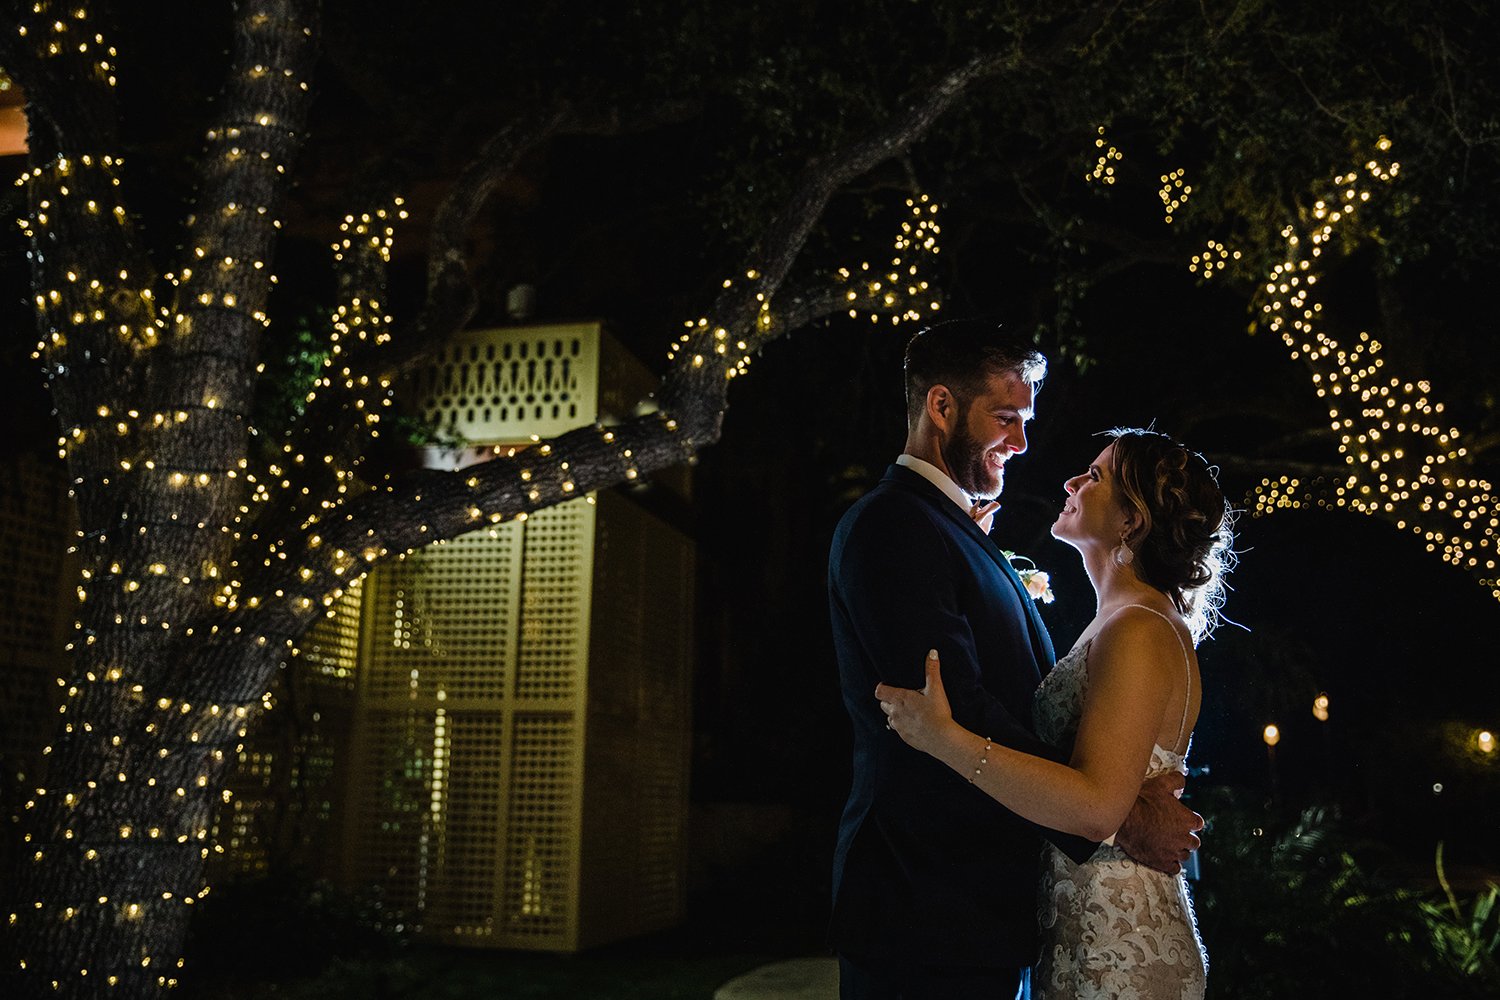 string light trees - night wedding - dramatic photography